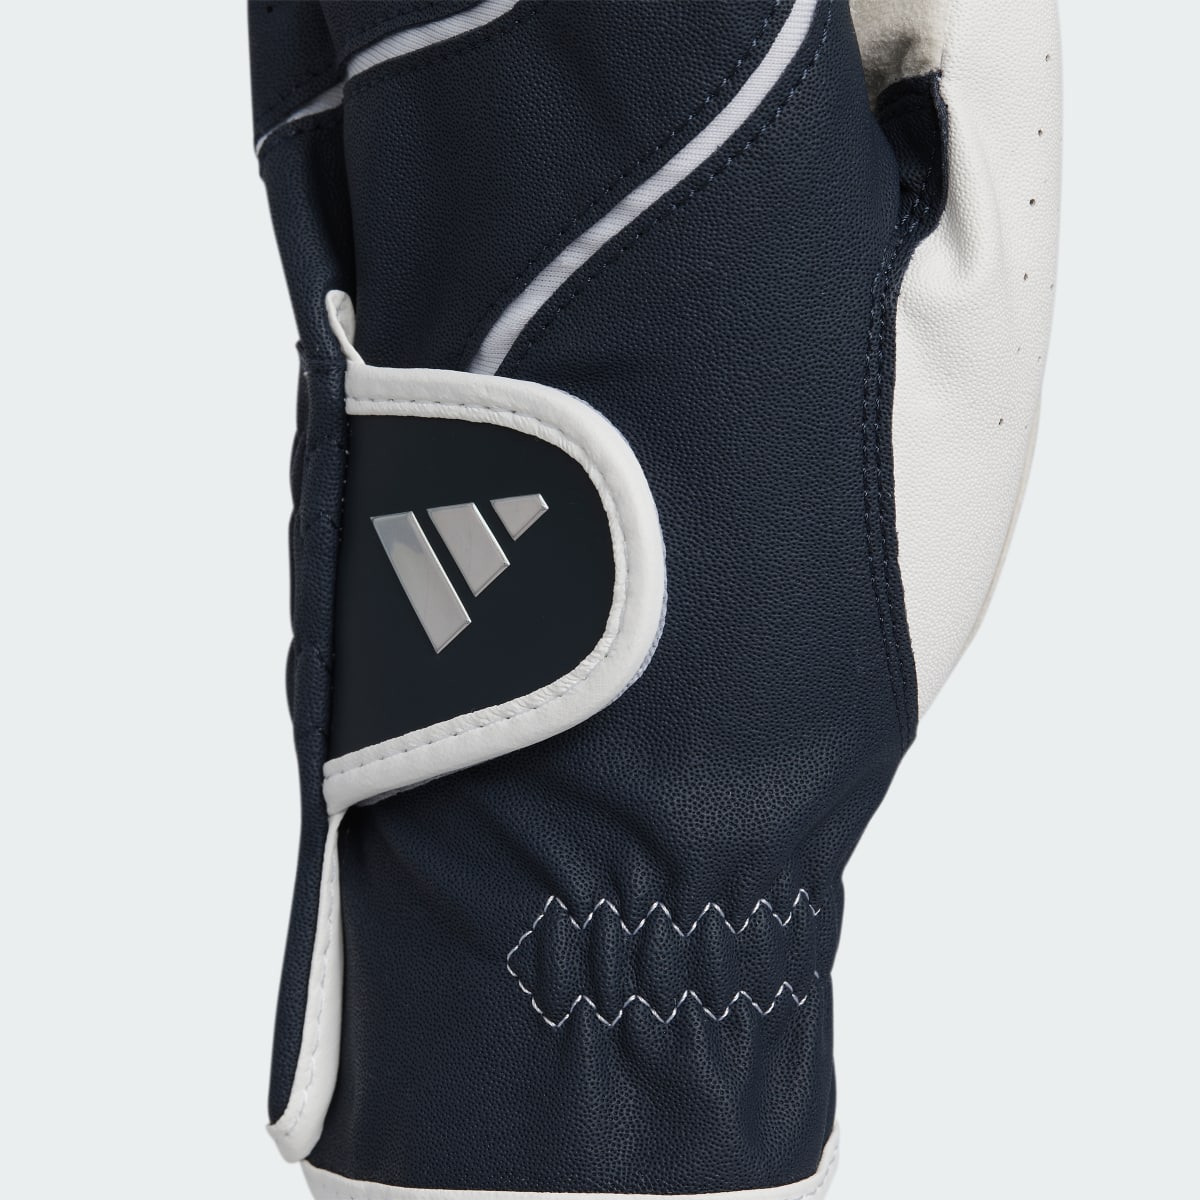 Adidas ZG Gloves. 4